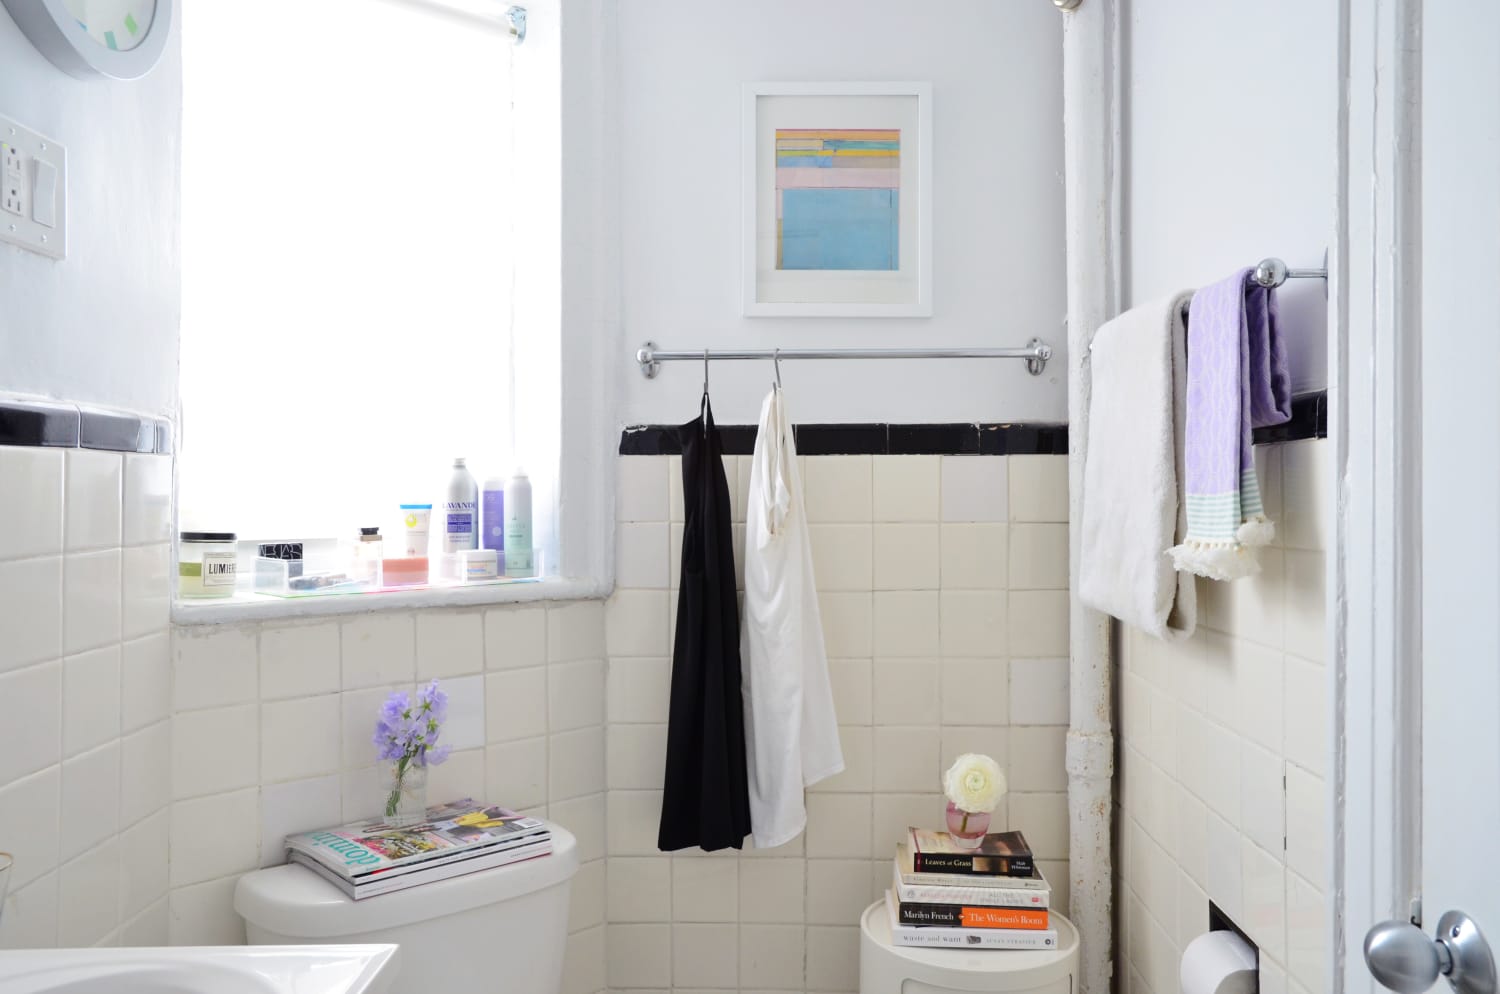  Storage  Solution Ideas  from a Tiny New York Bathroom  